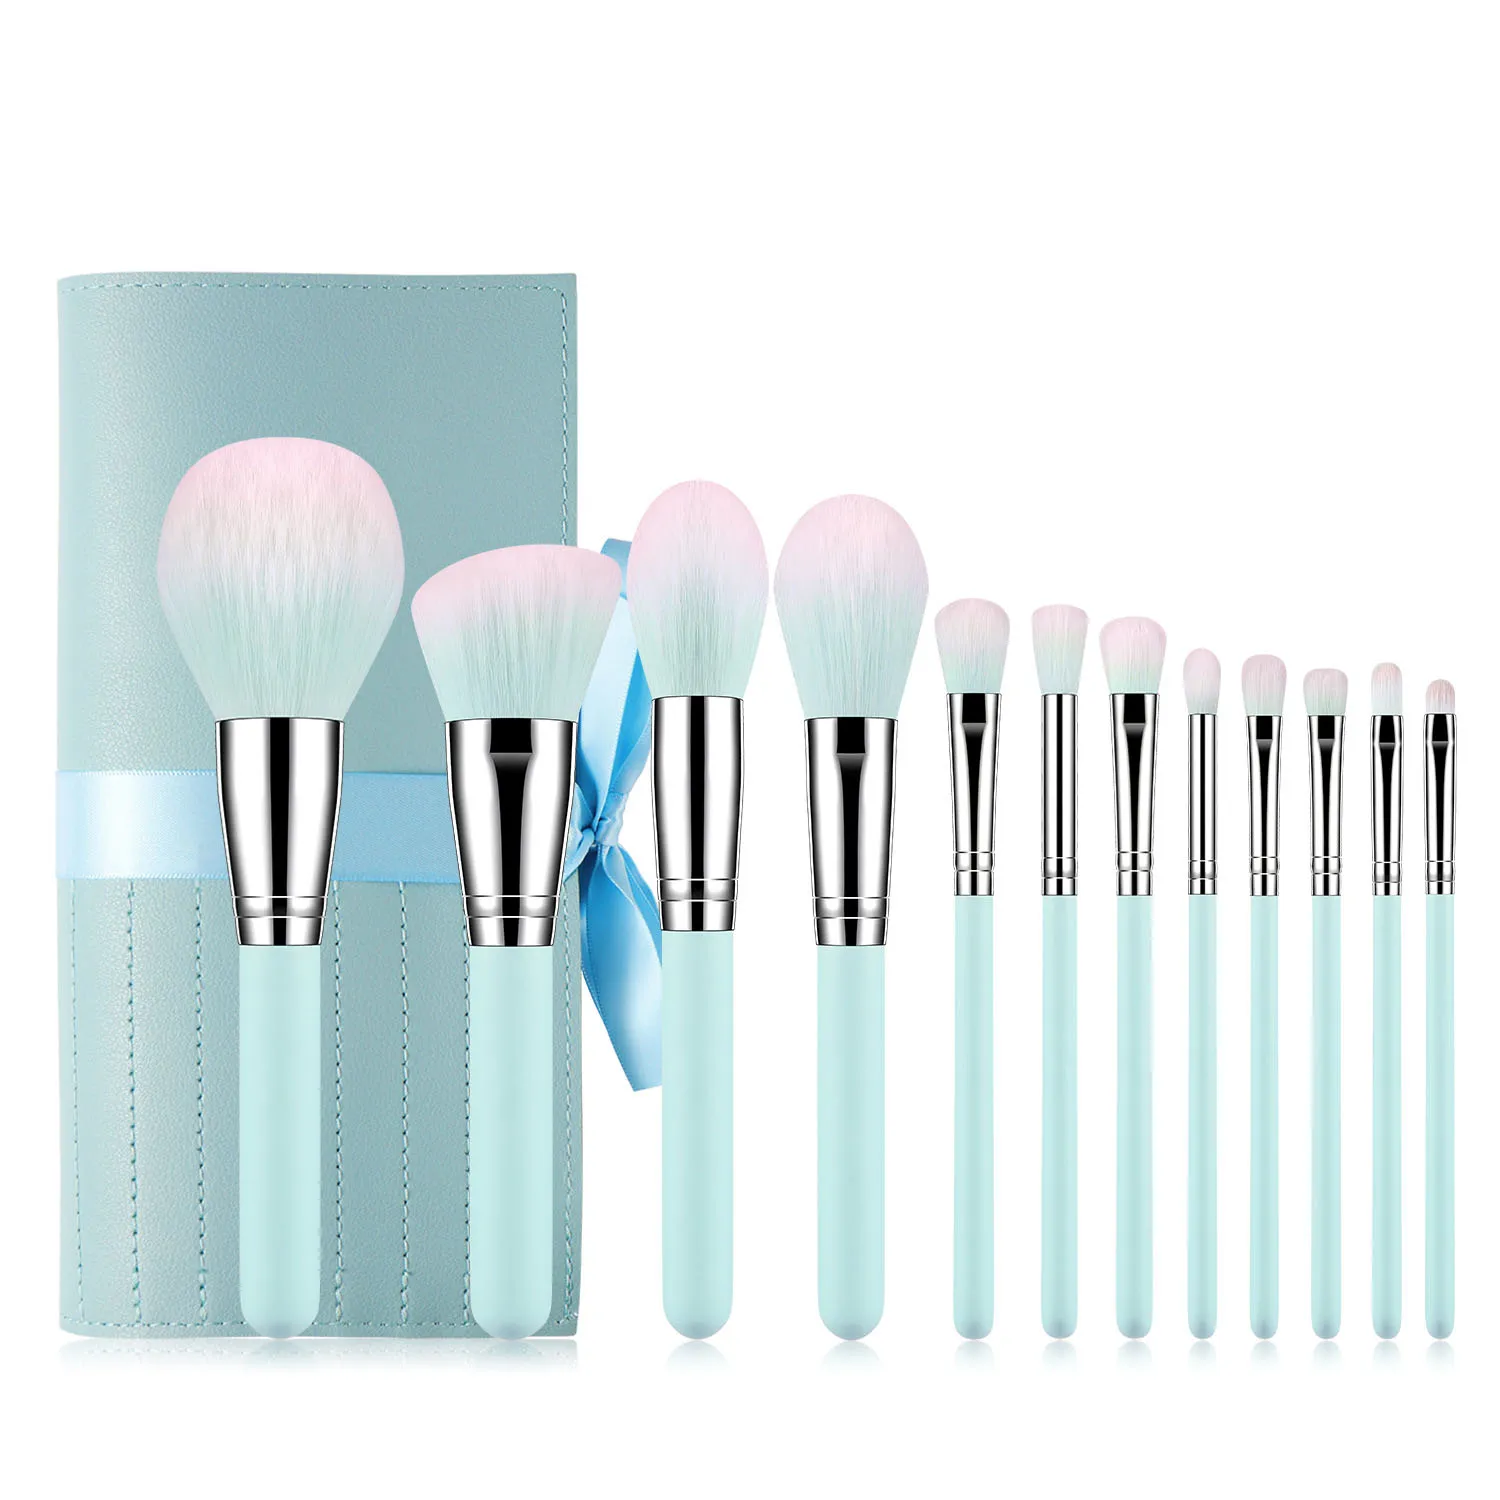 

12pcs Makeup Brushes Set Premium Synthetic Kabuki Brush Cosmetics Foundation Concealers Powder Blush Blending Face Eye Shadows